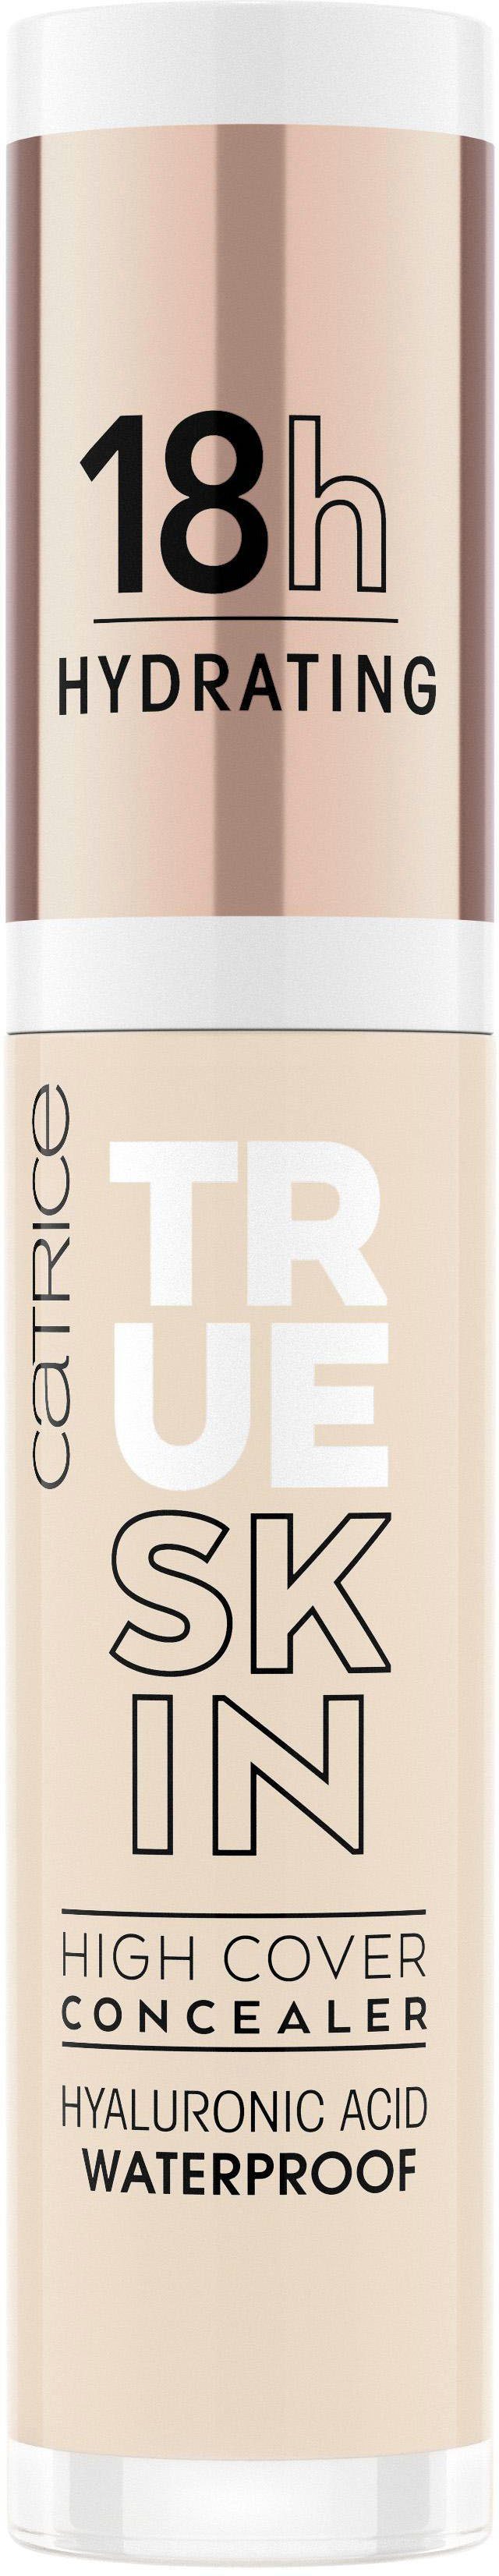 True Cover 3-tlg. Skin High Concealer Catrice Neutral Concealer, Swan